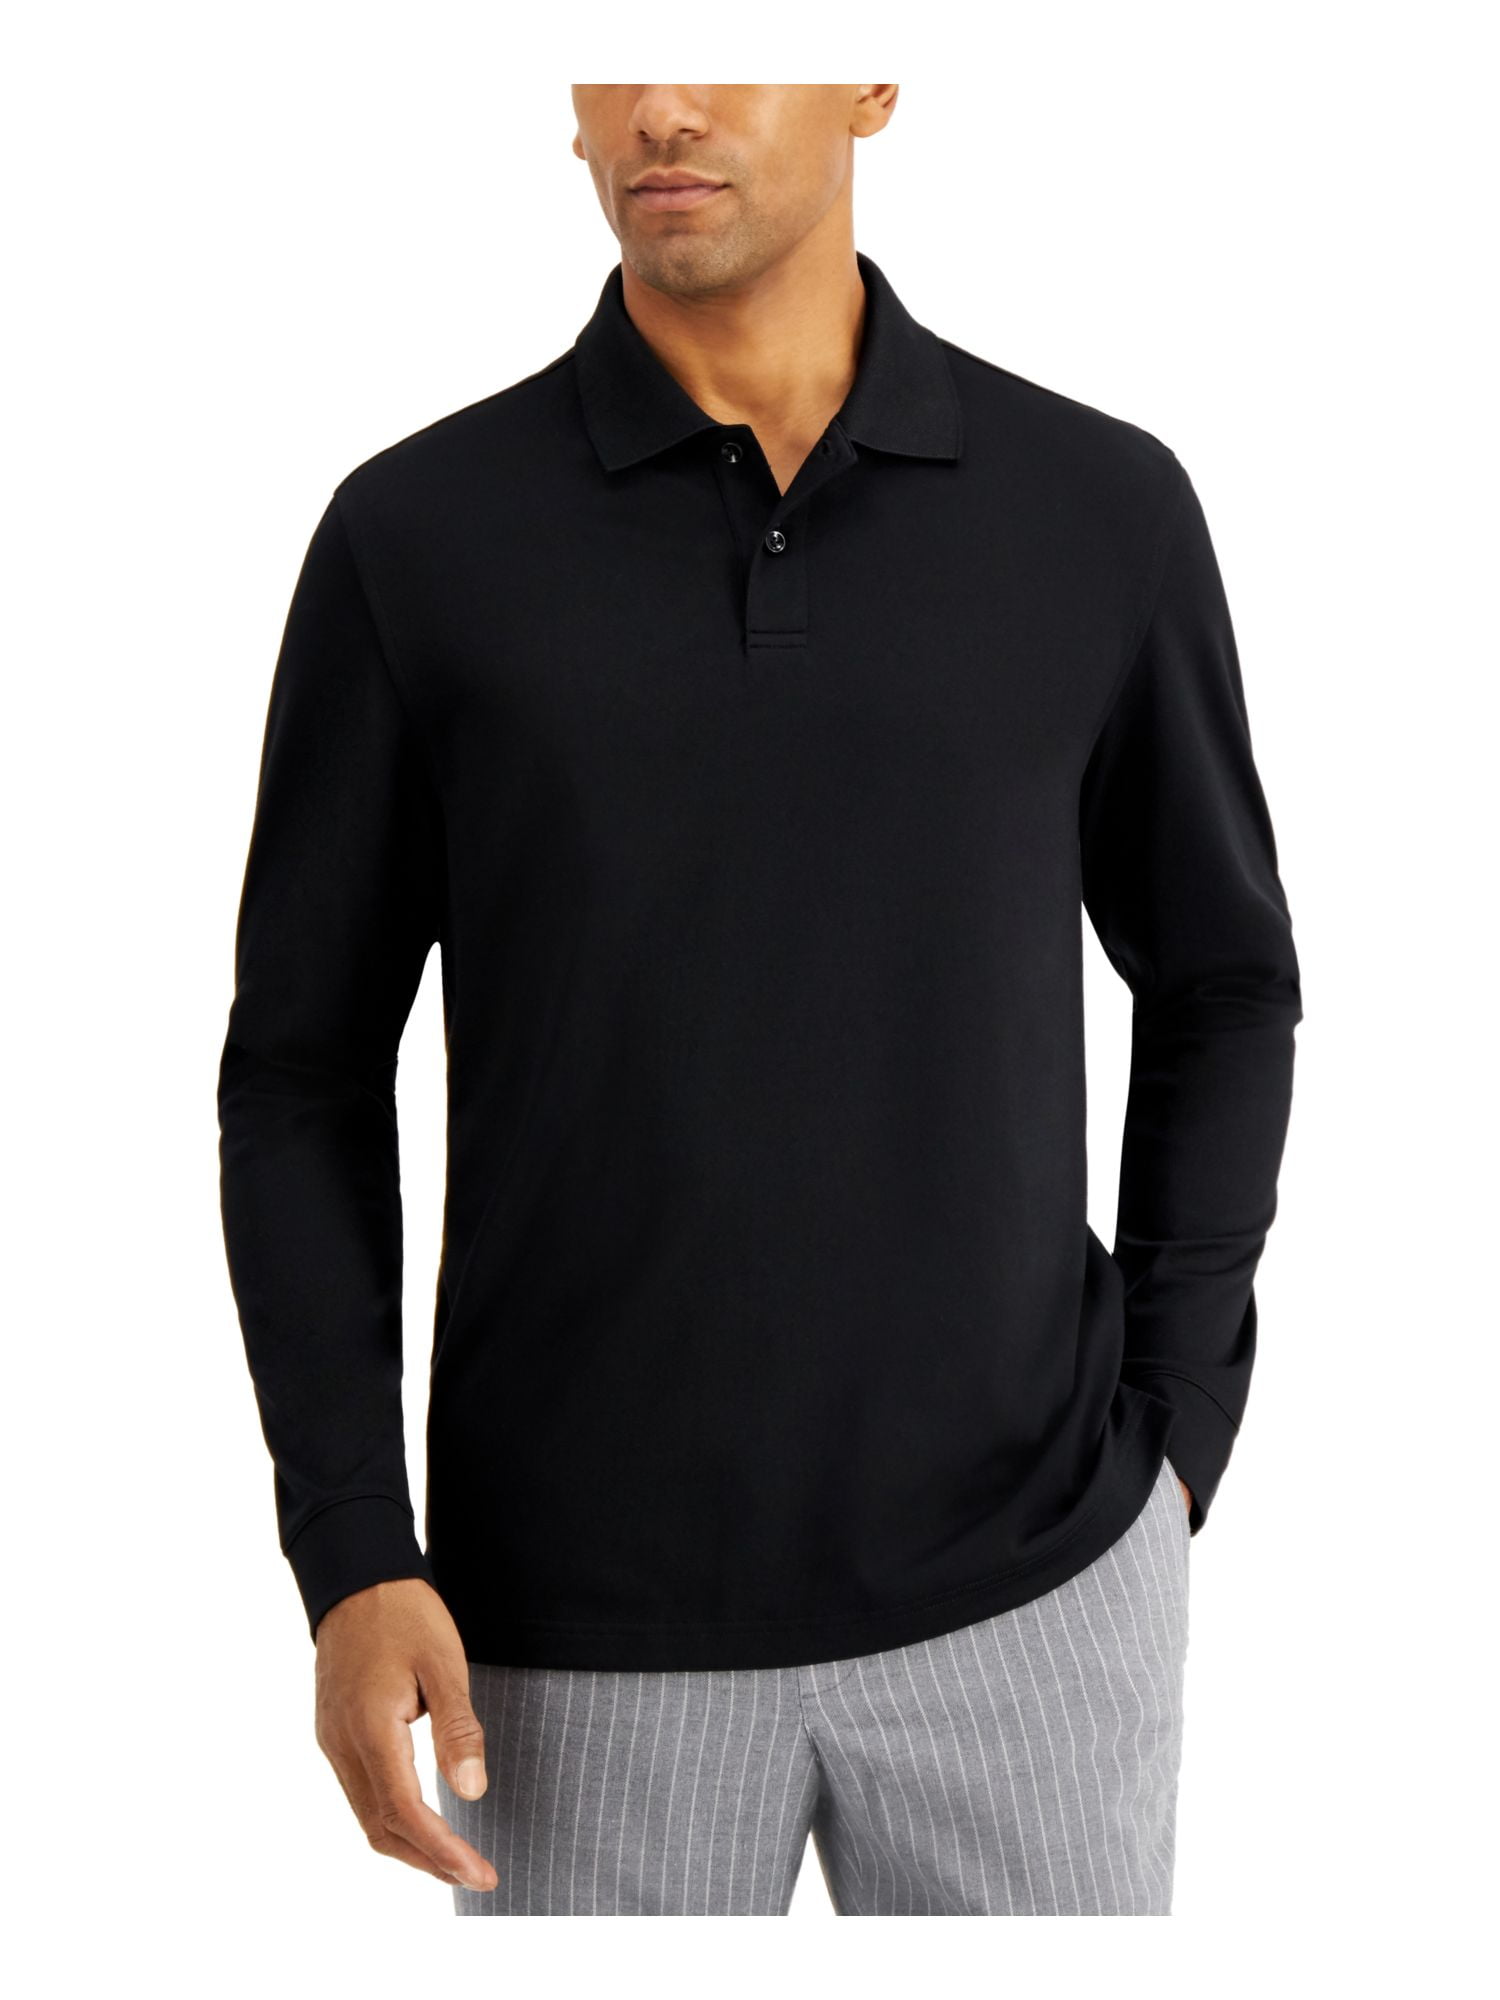 Tasso Elba Mens Long Sleeves Collared Polo Shirt Black M